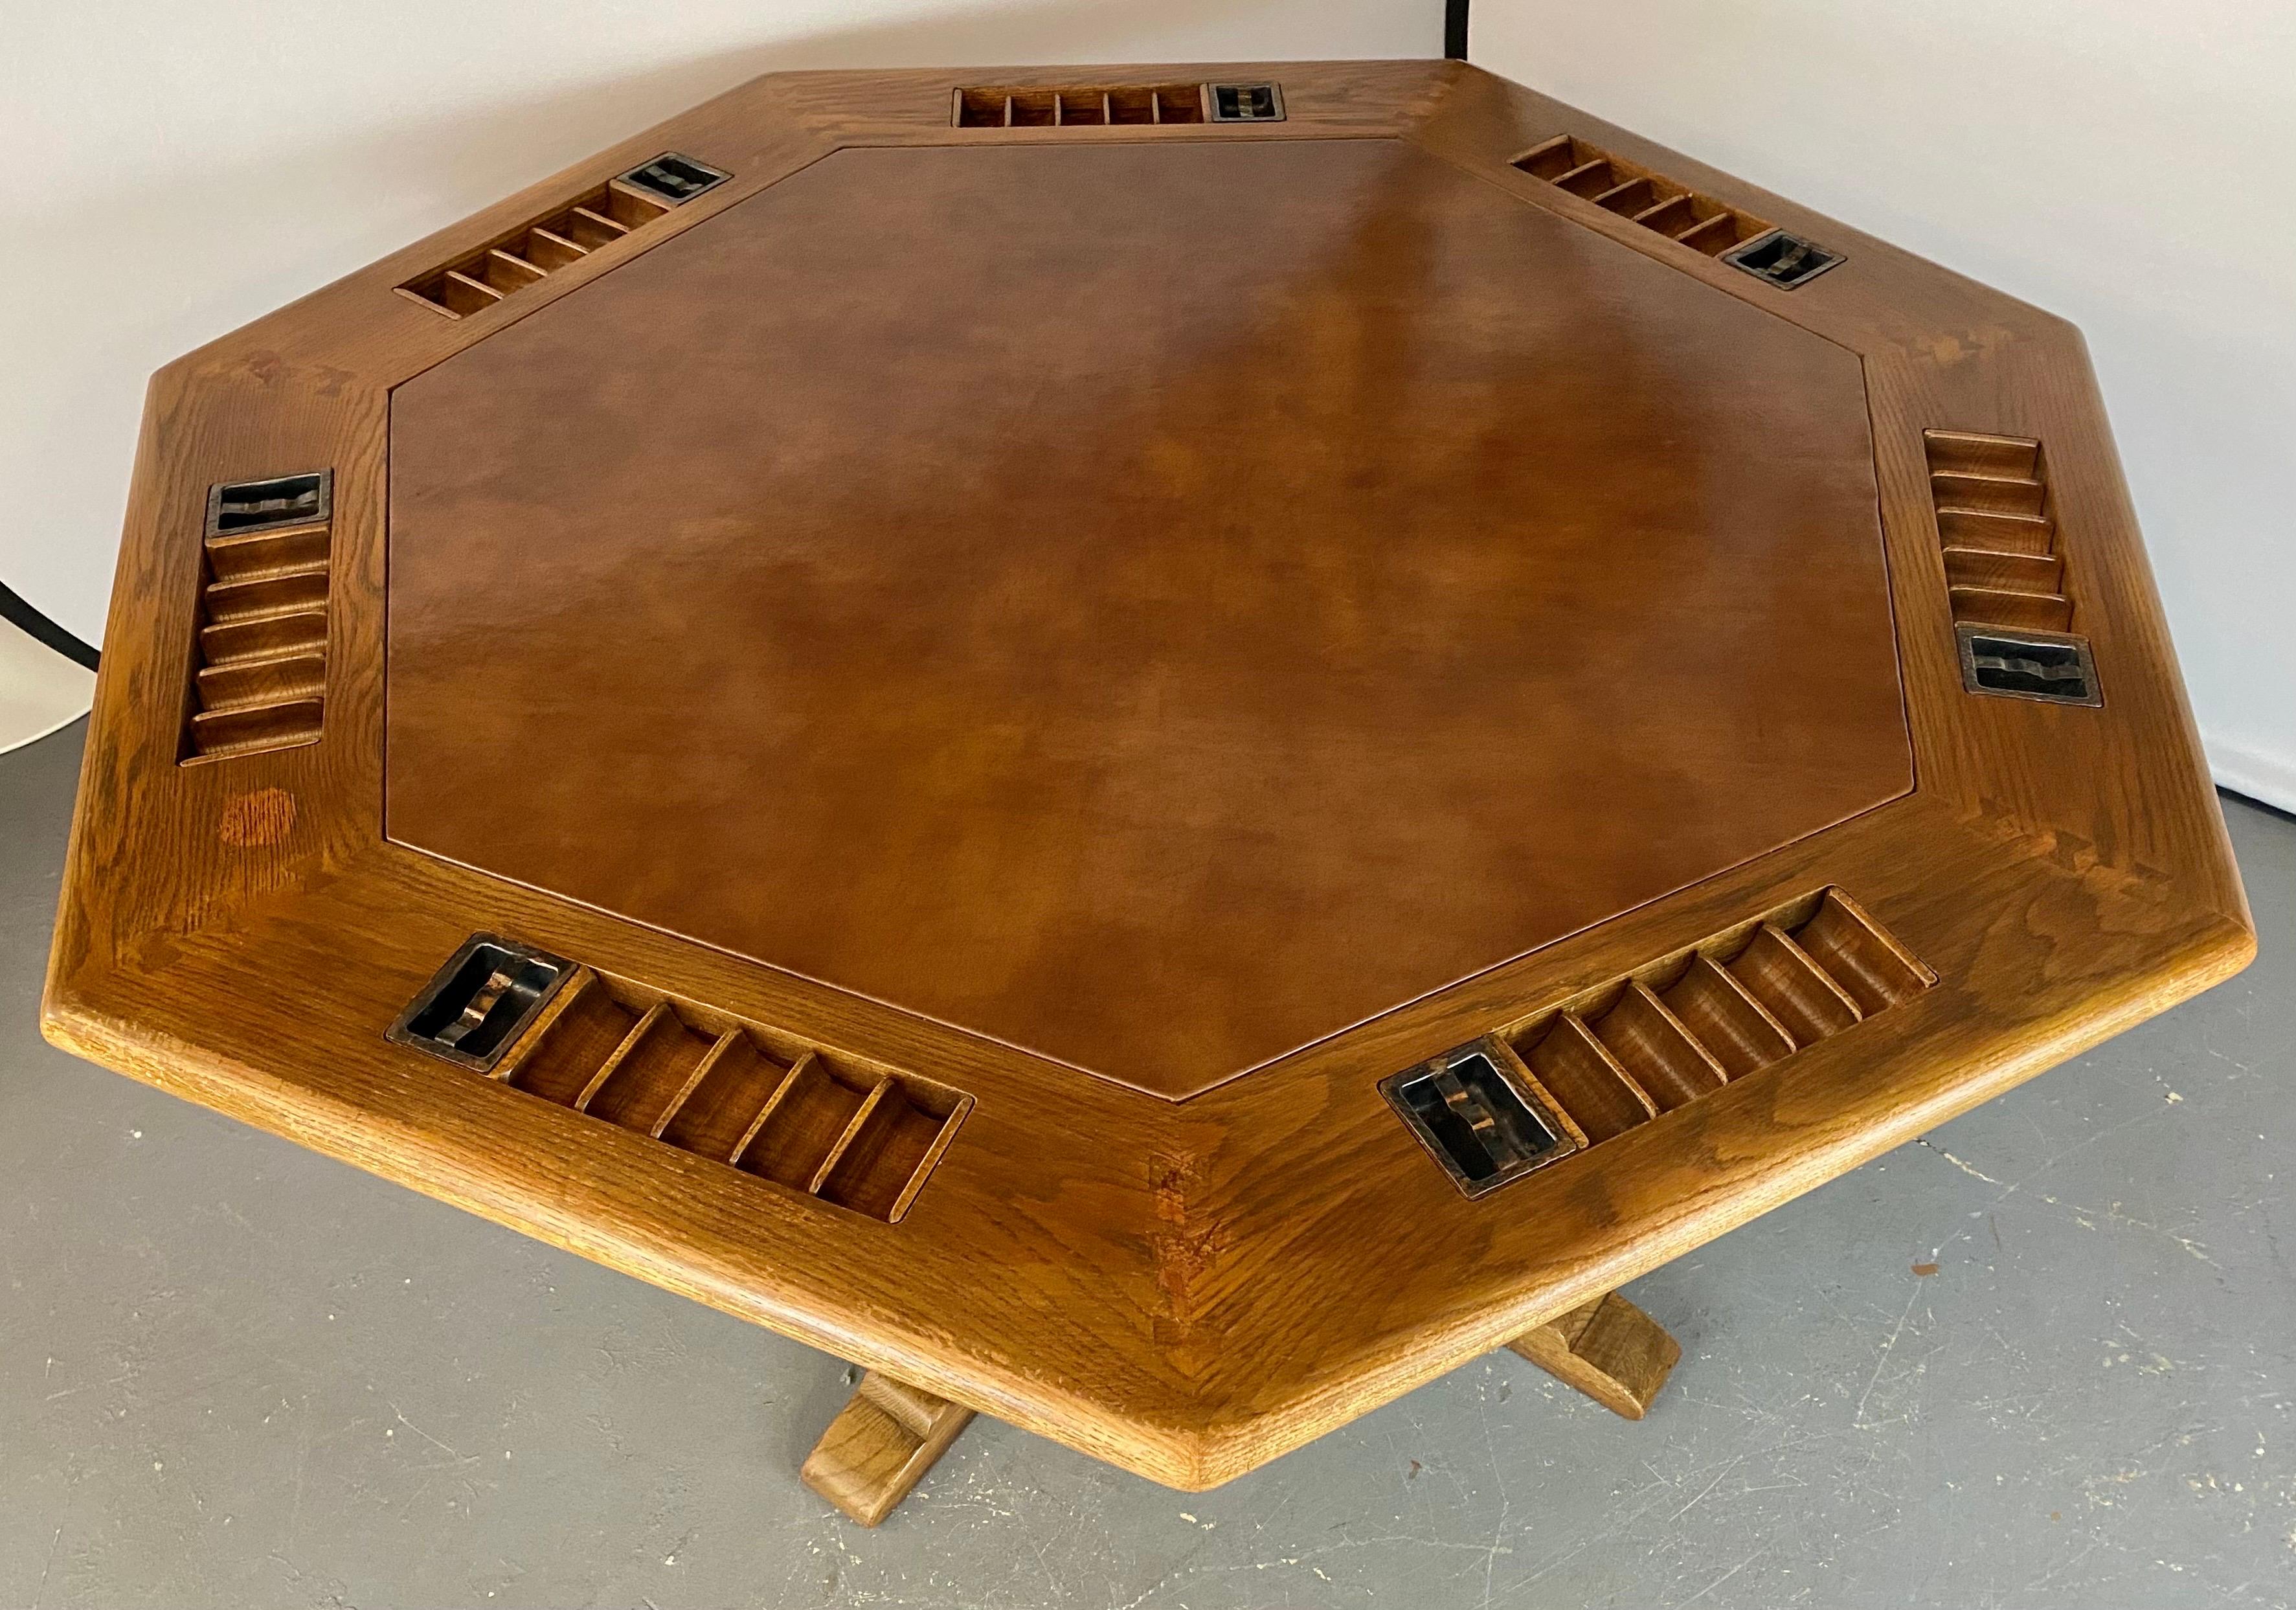 Faux Leather Jacobean Style Oak Poker Table for 7 Players by Romweber